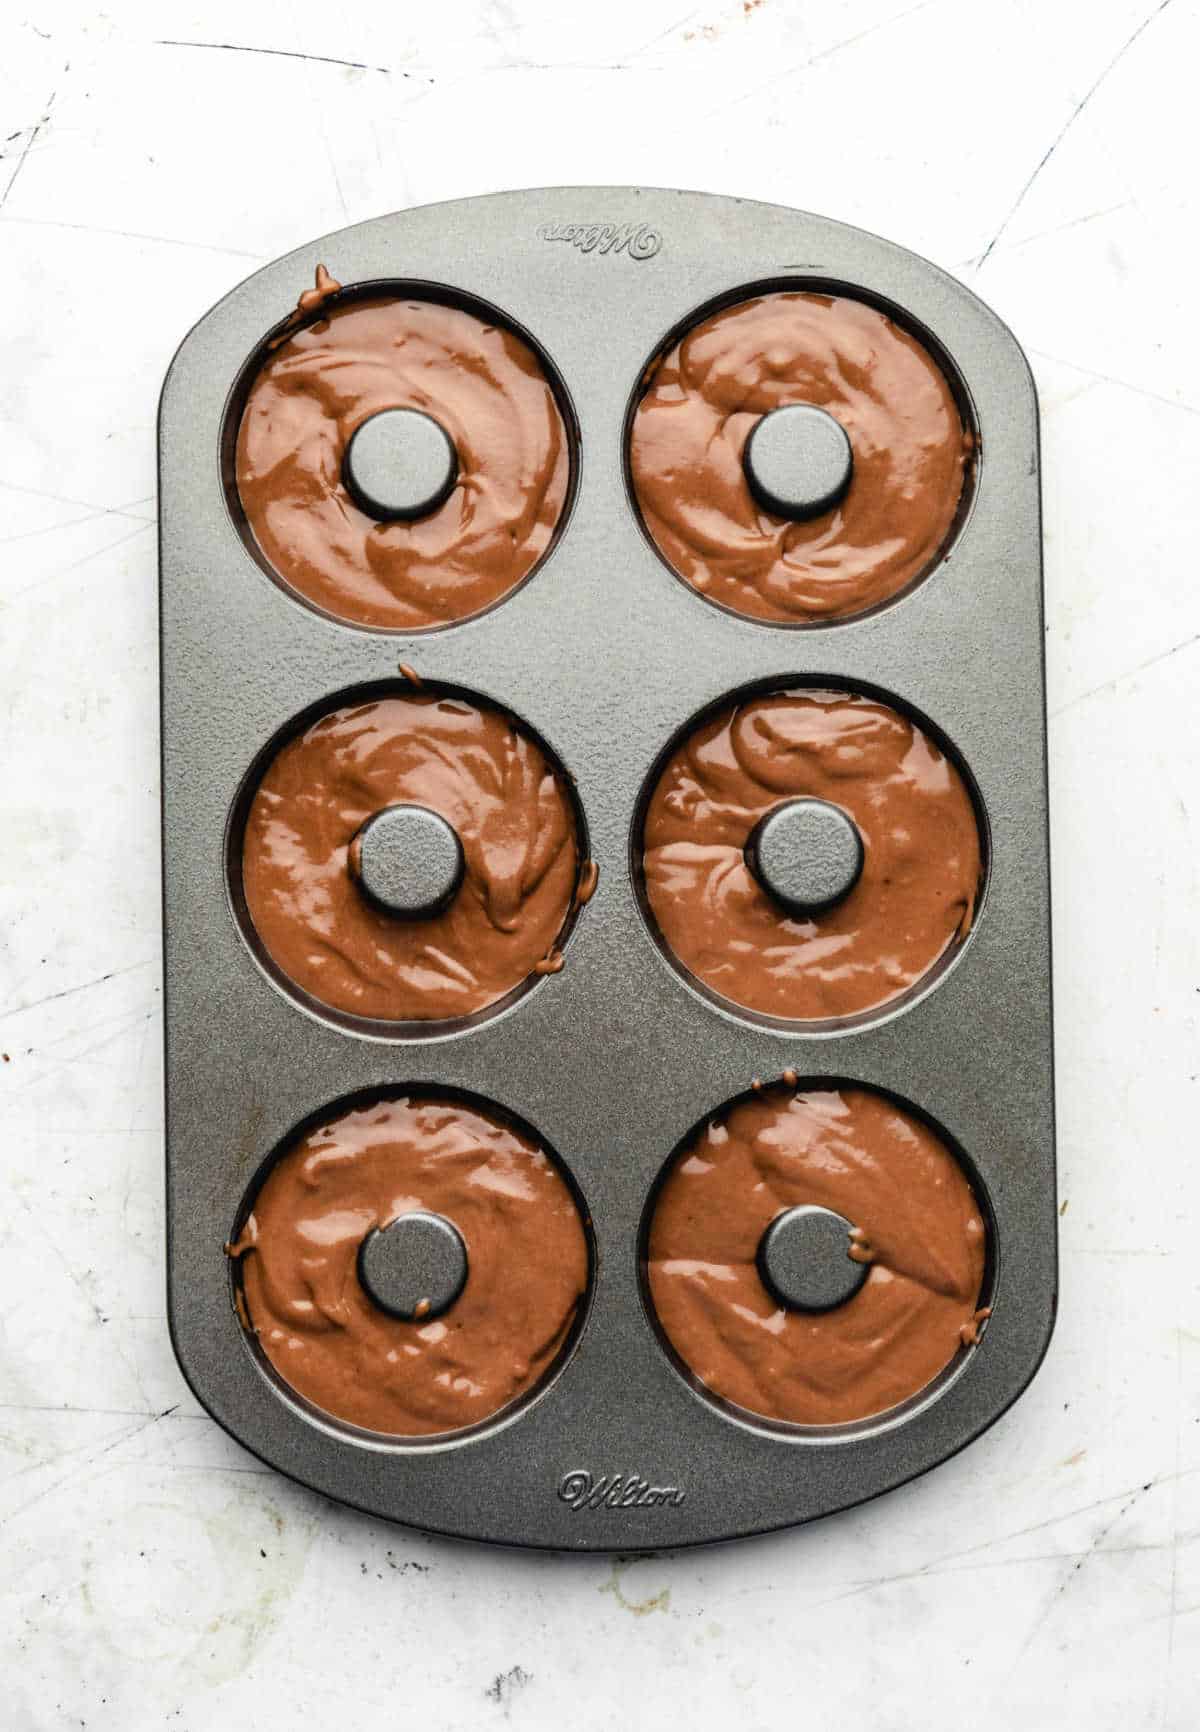 Chocolate buttermilk donut batter in a donut pan. 